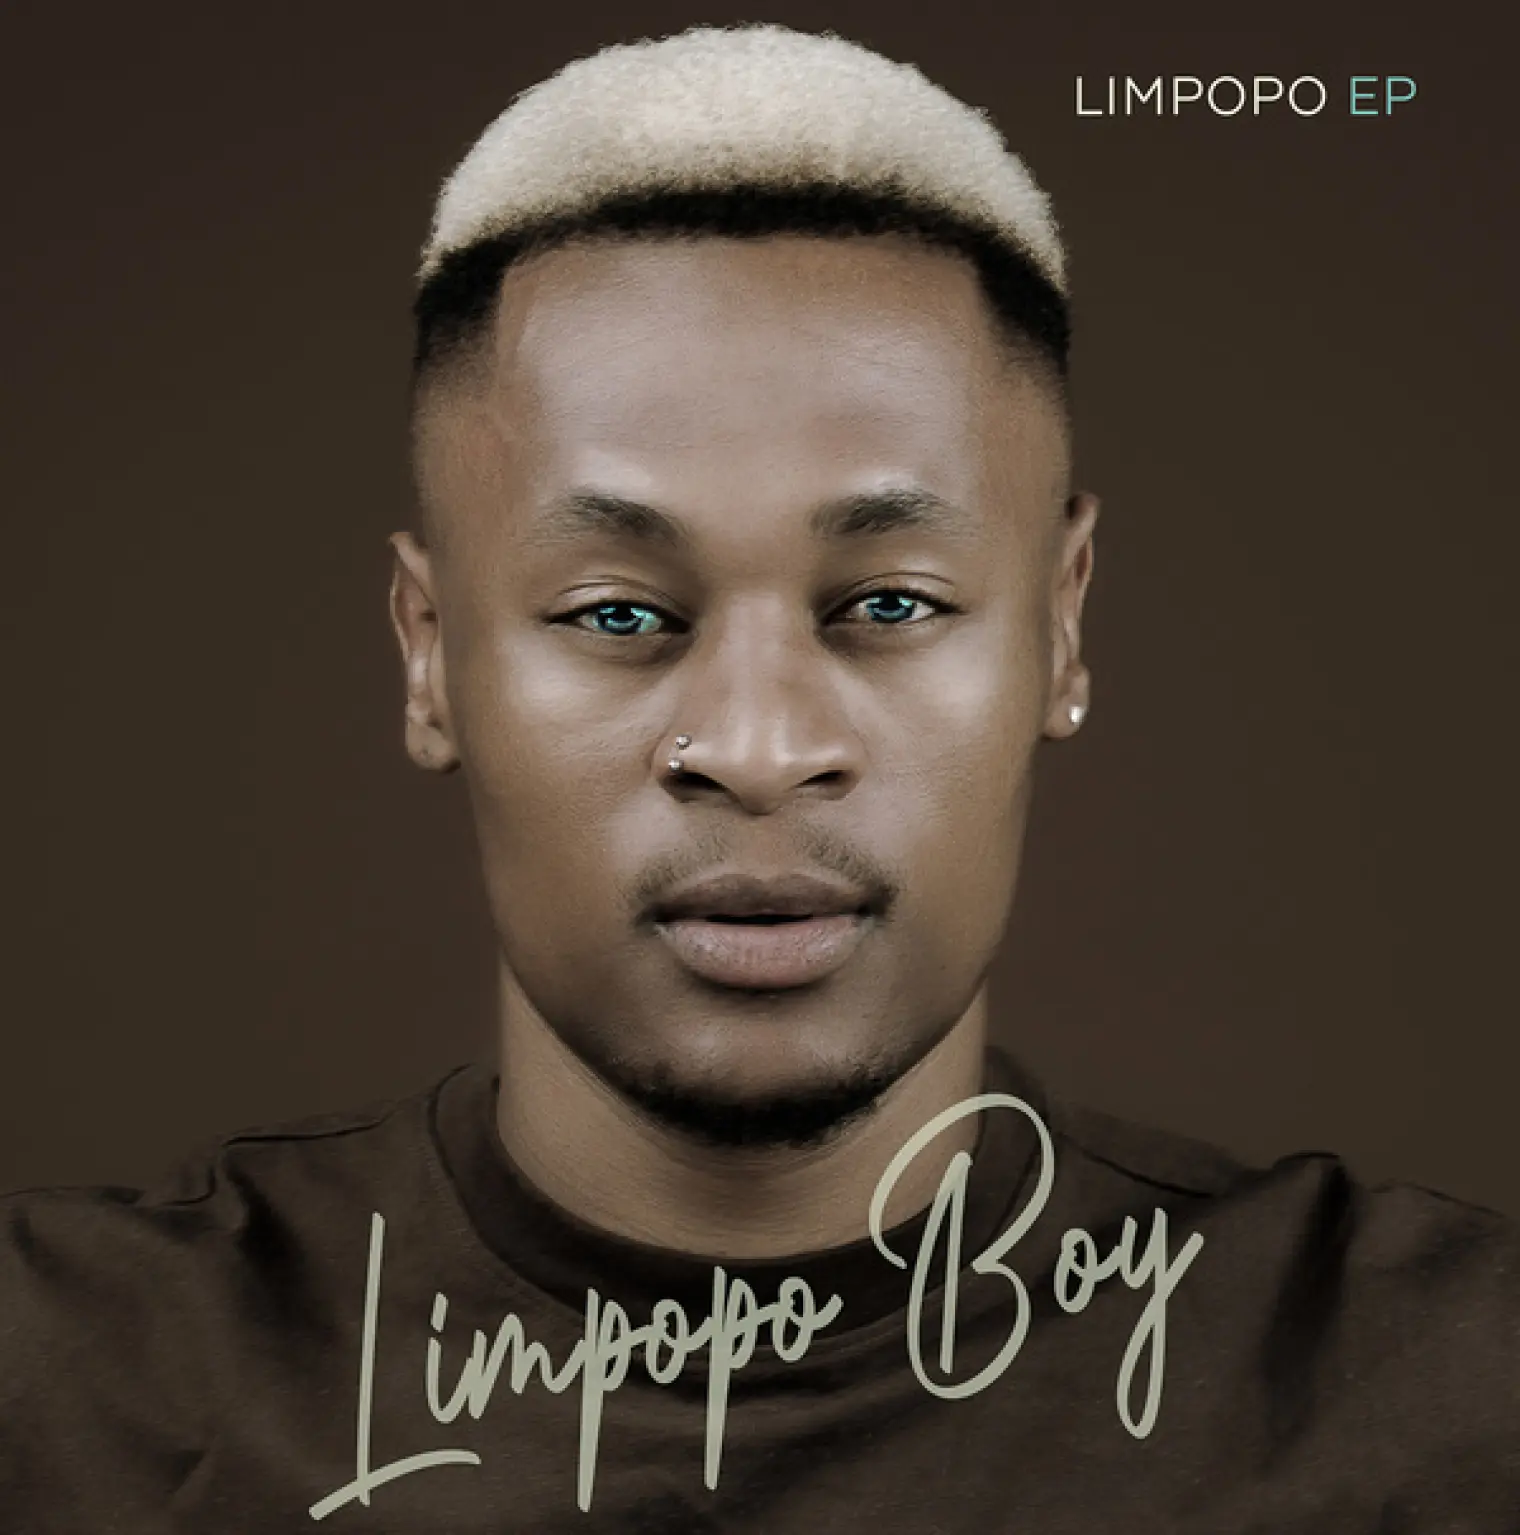 Limpopo EP -  Limpopo Boy 